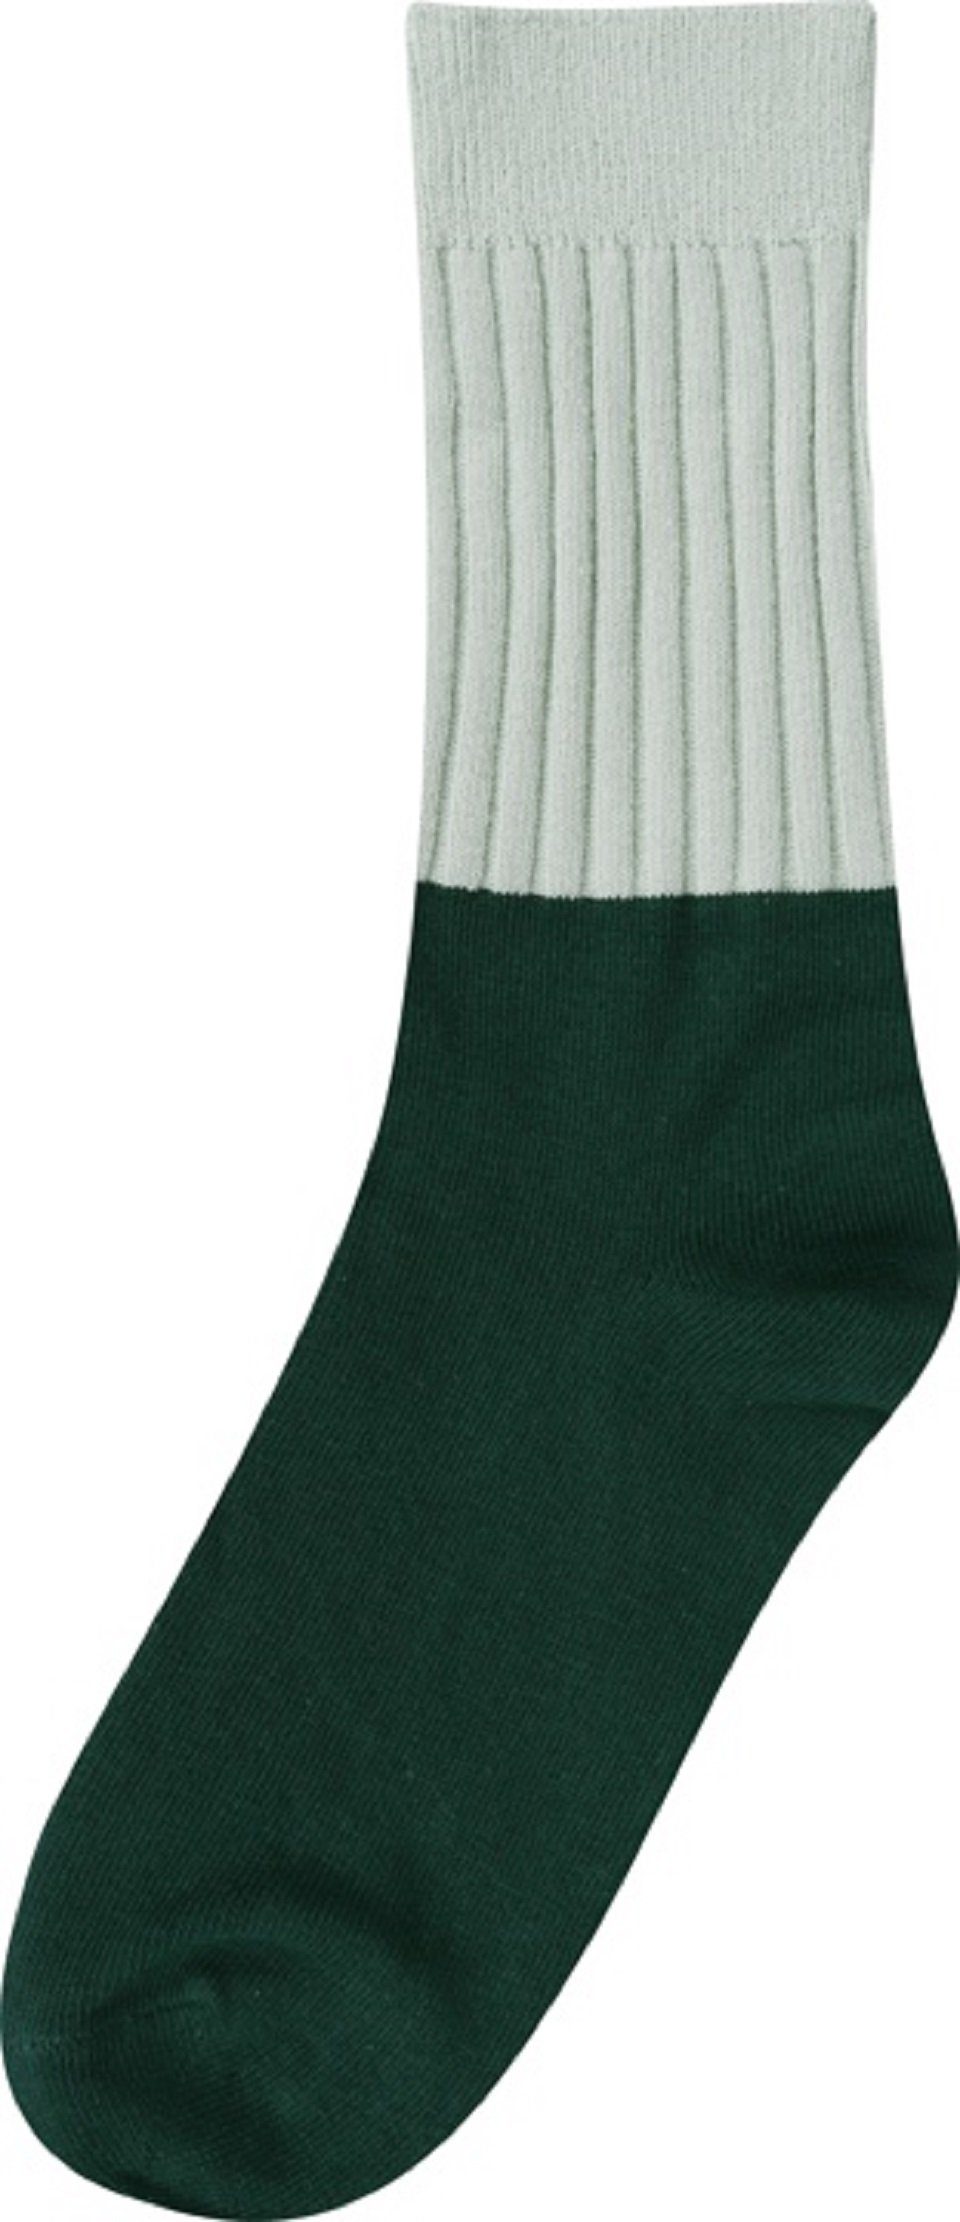 Socken 2x New Socken Unisex grün Capelli York